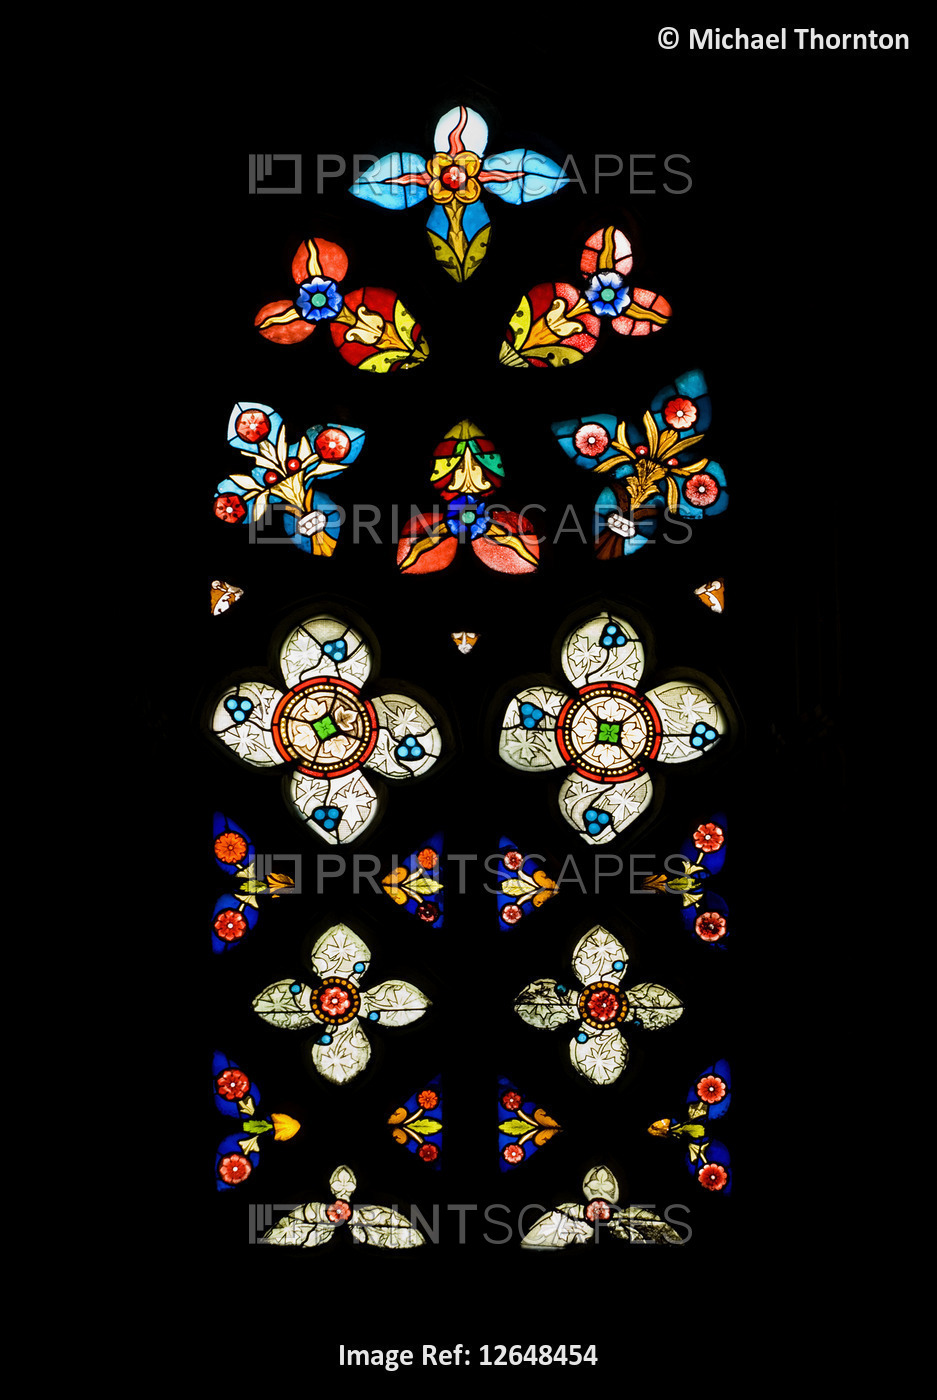 Gothic Stained Glass Windows in Spanish Church of San Severino, Balmaseda, The ...